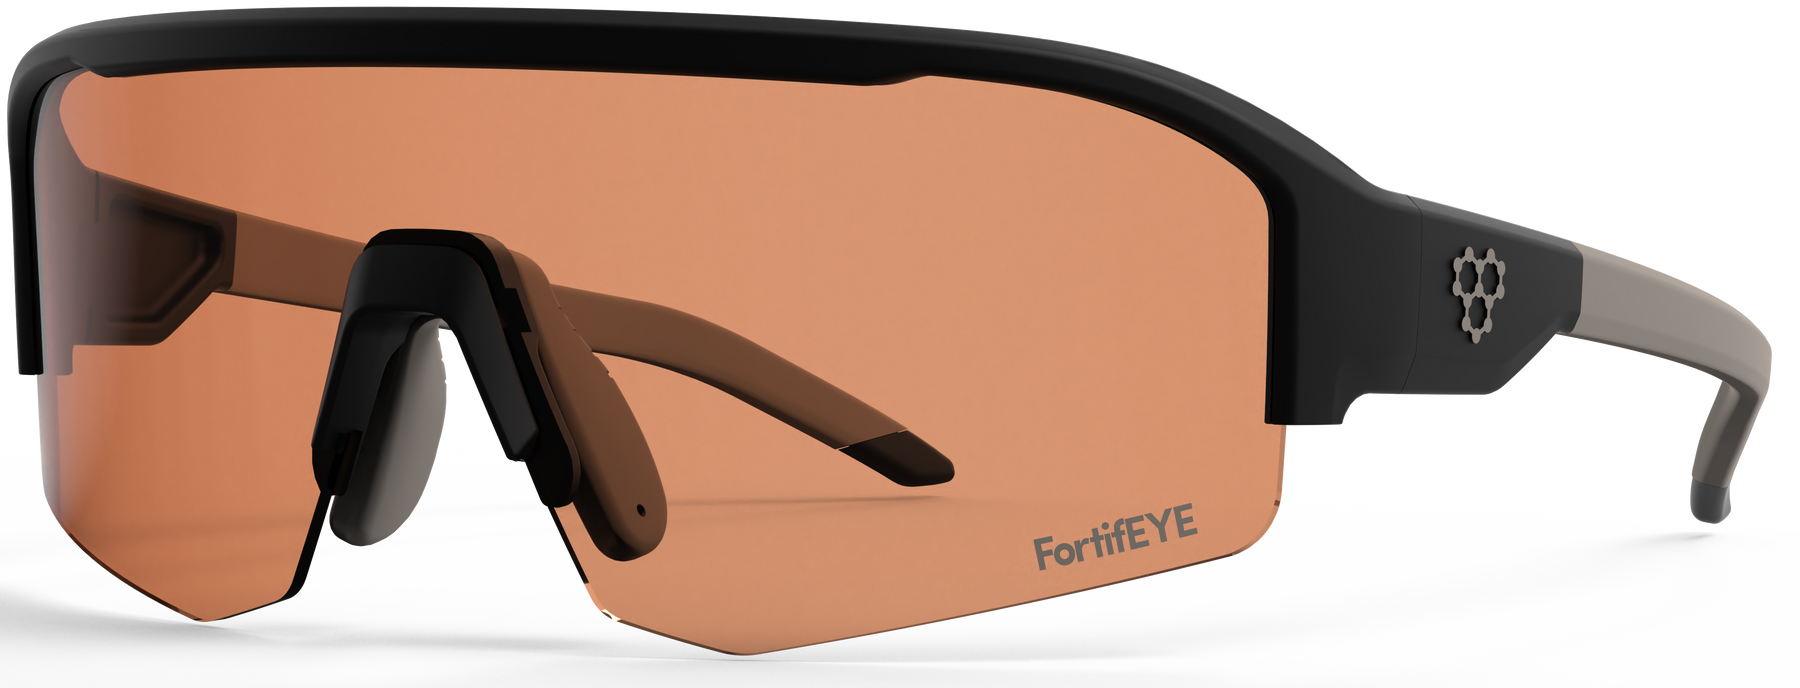 CRBN Pickleball Glasses w/ FortifEYE™ Lens Tech - Best Safety Eyewear